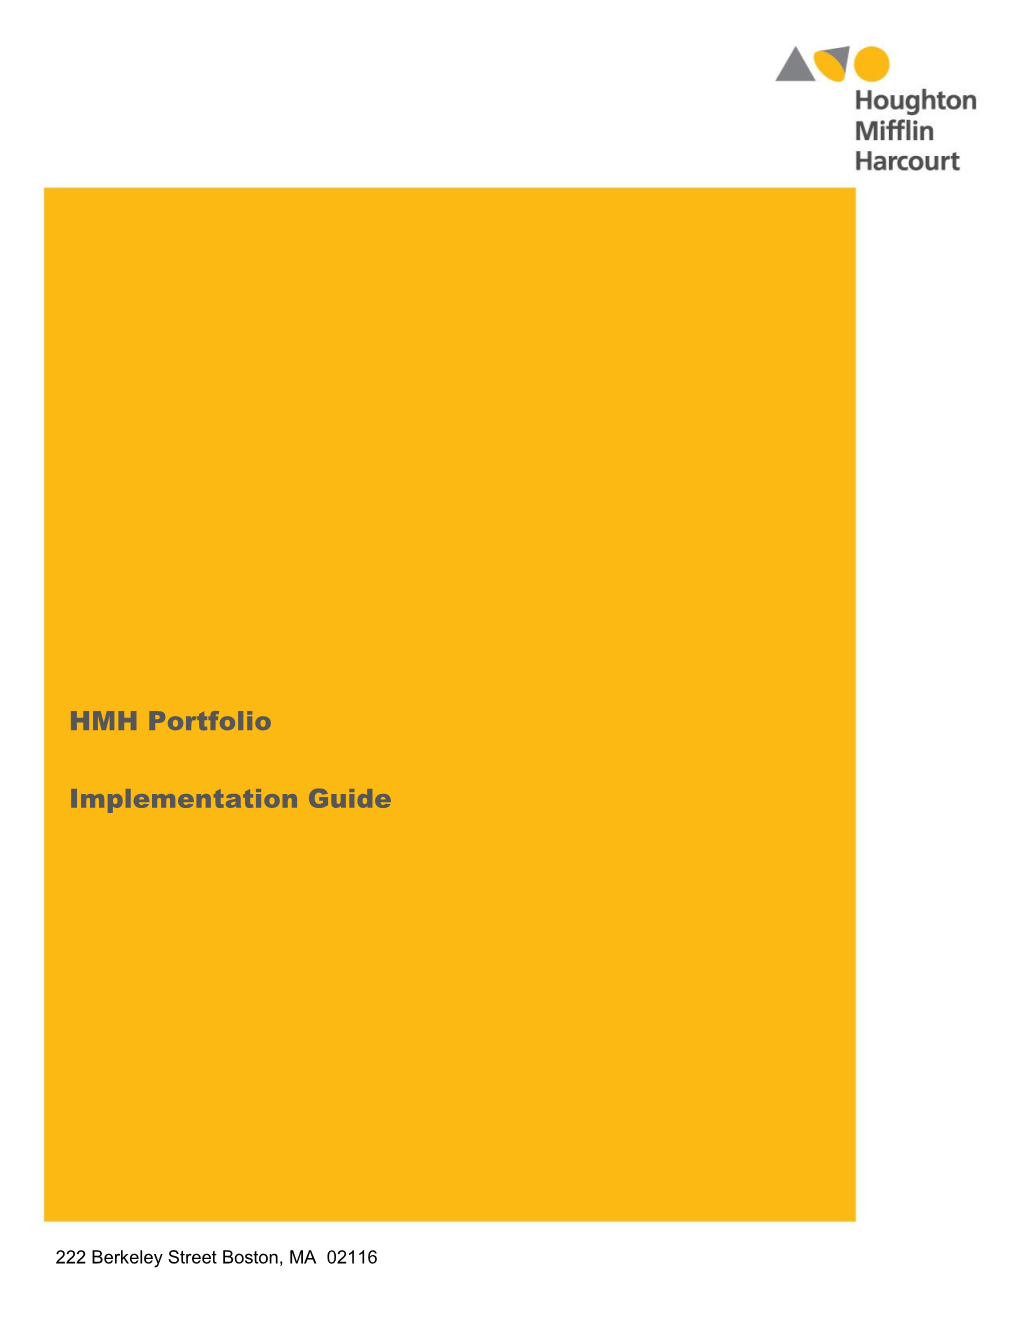 HMH Portfolio Implementation Guide